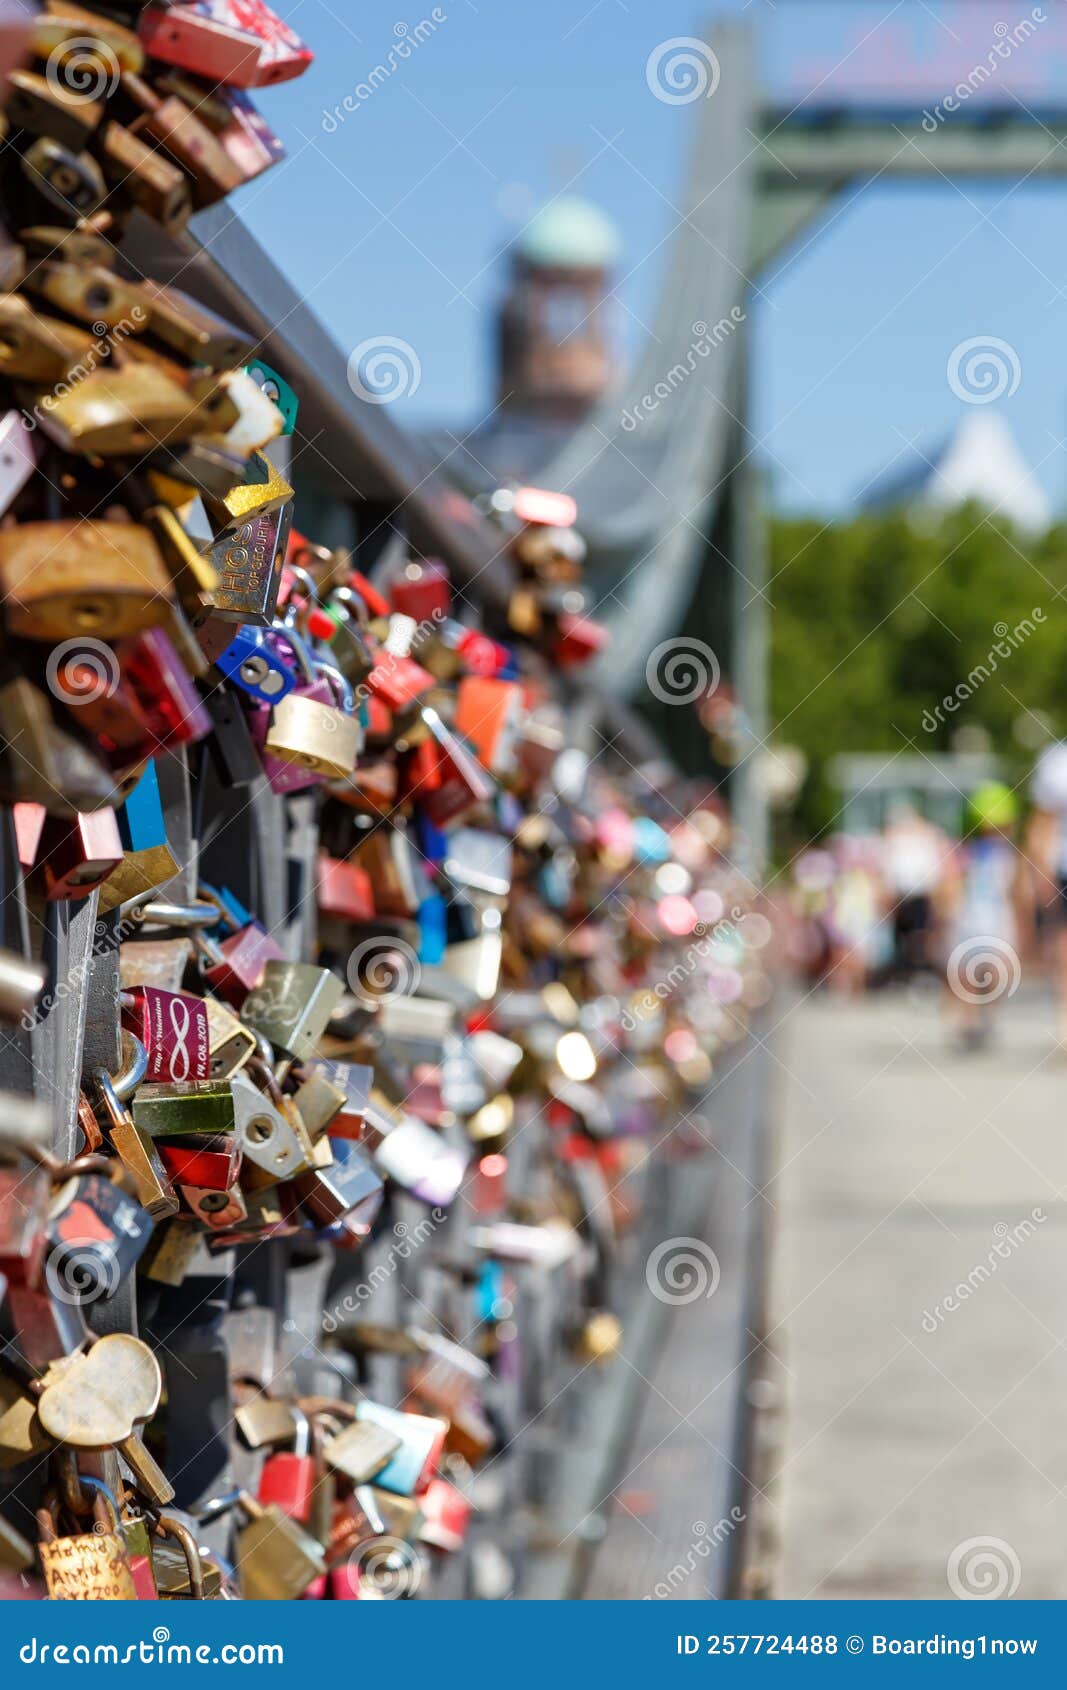 frankfurt love locks on eiserner steg bridge portrait format in germany